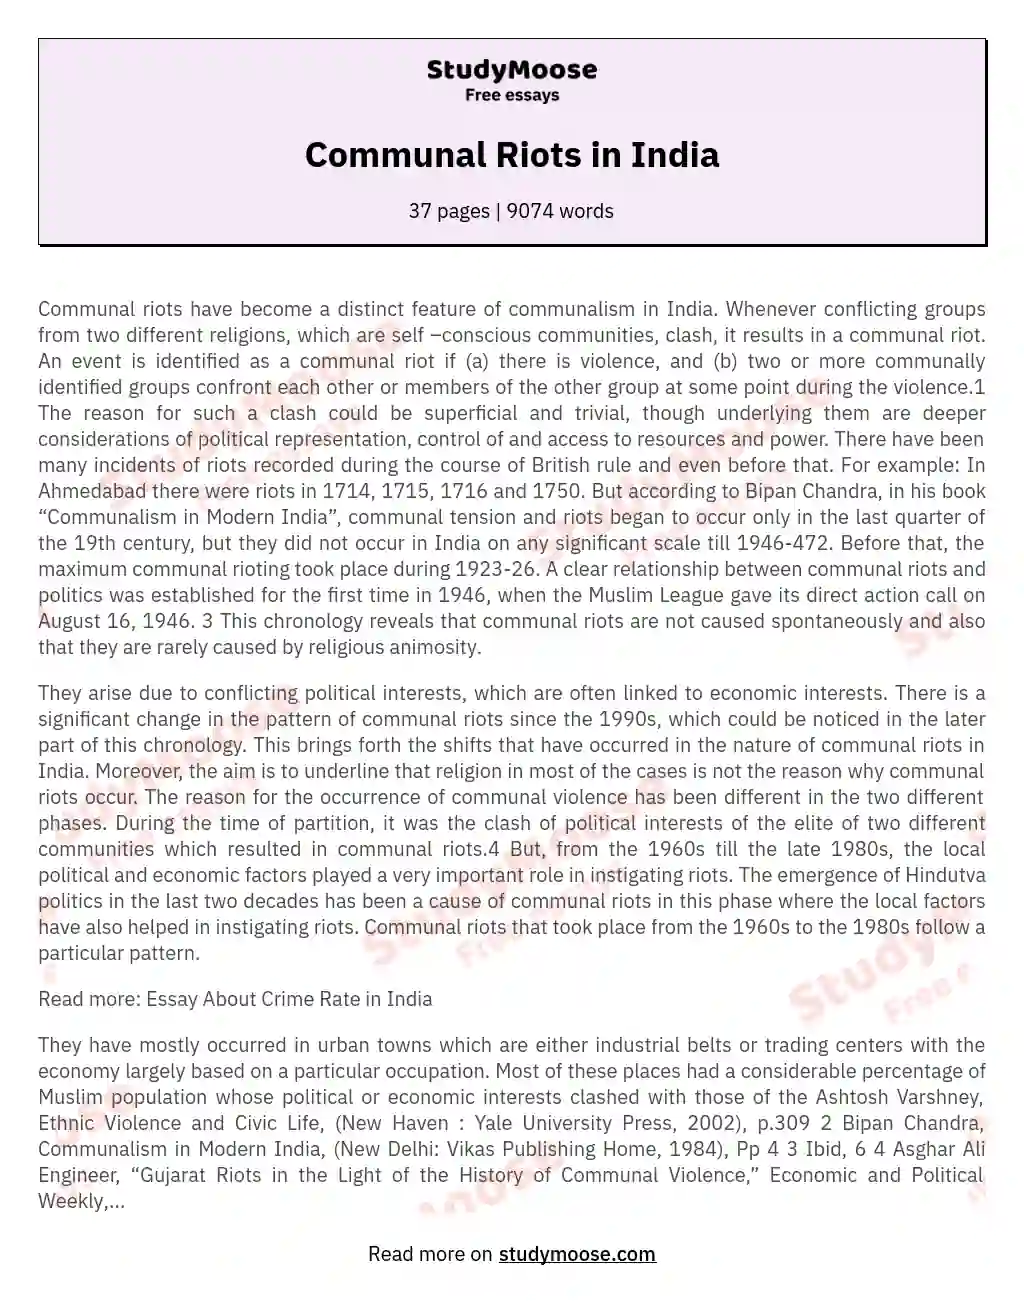 Communal Riots in India essay